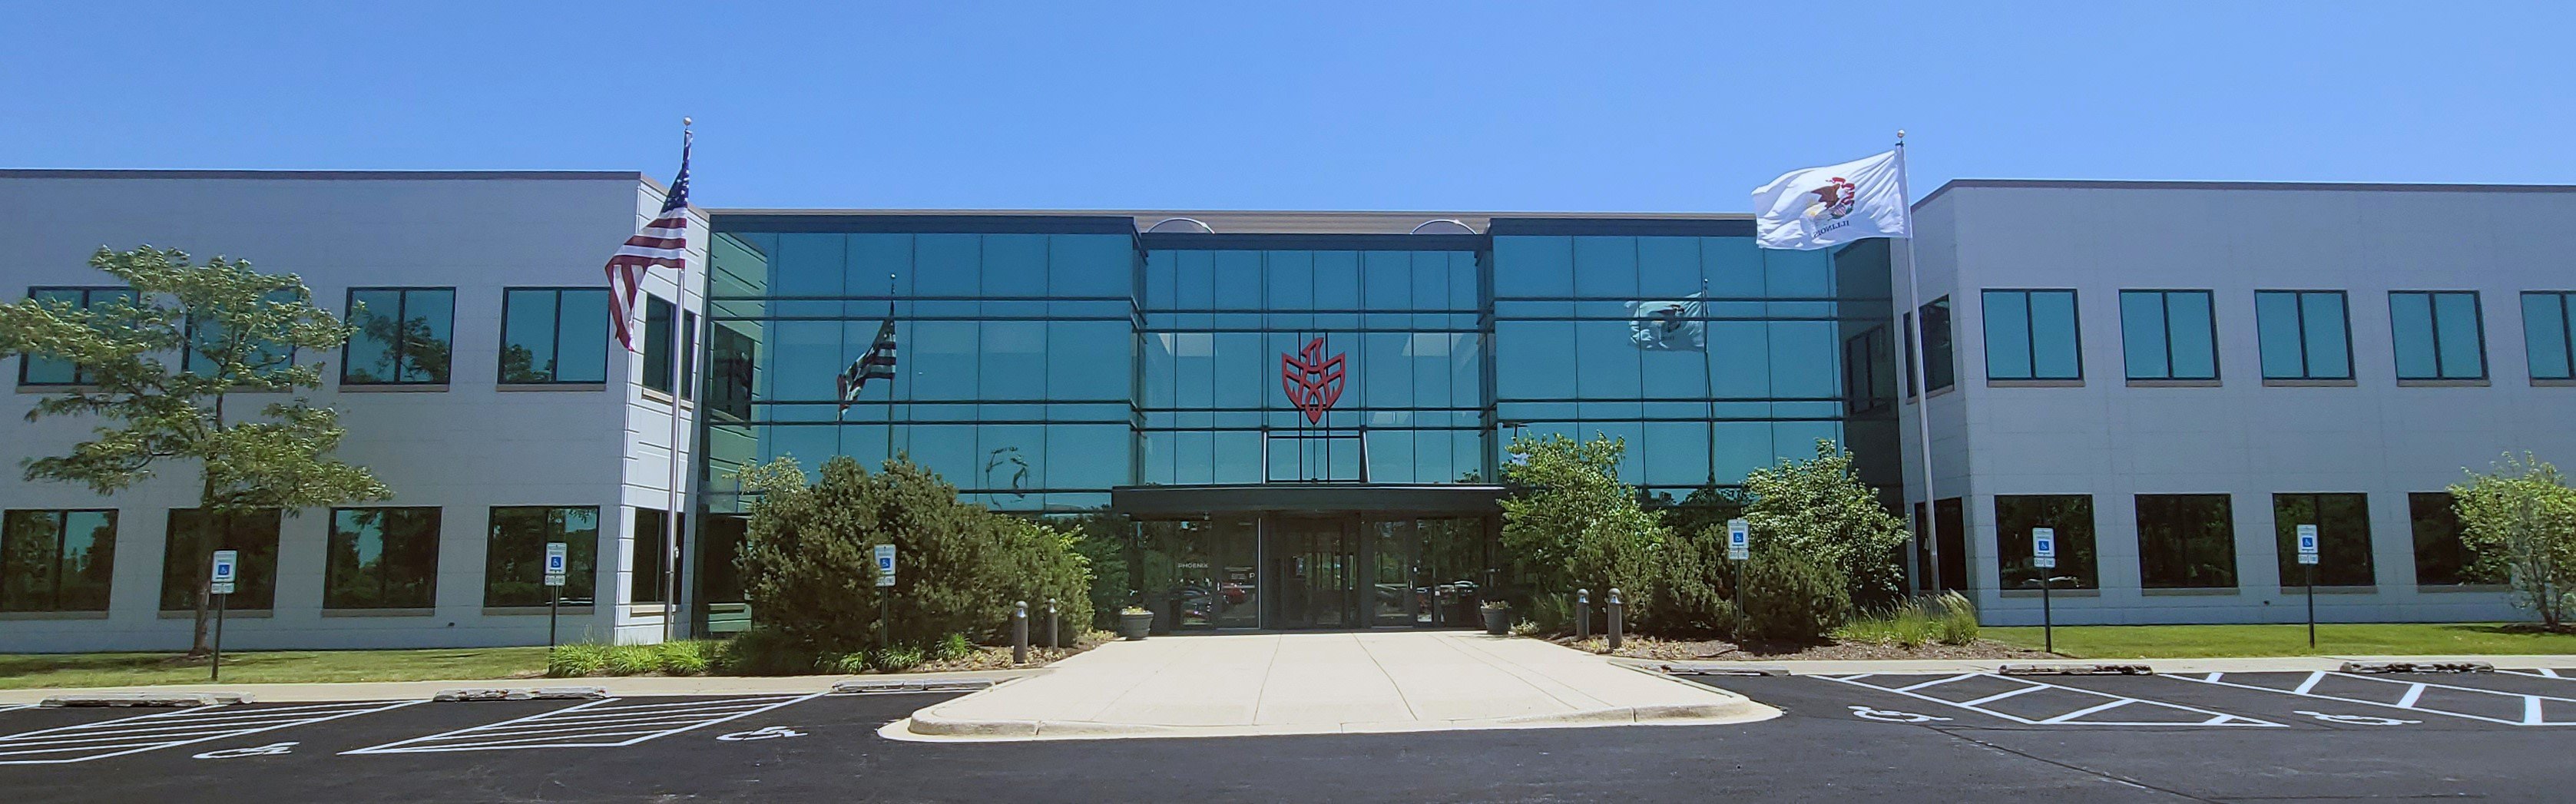 PRESS RELEASE: PHOENIX Opens New Corporate Office in Aurora, IL